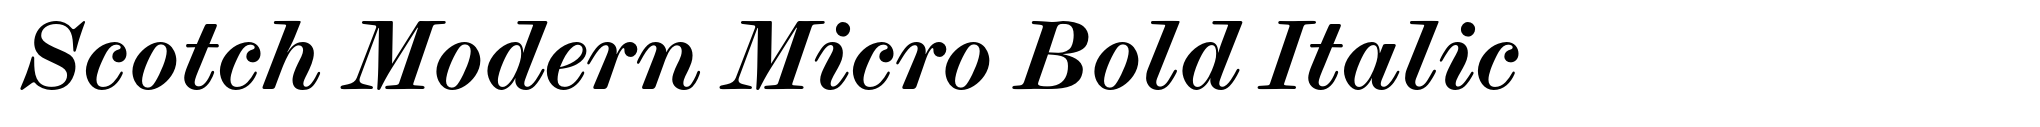 Scotch Modern Micro Bold Italic image